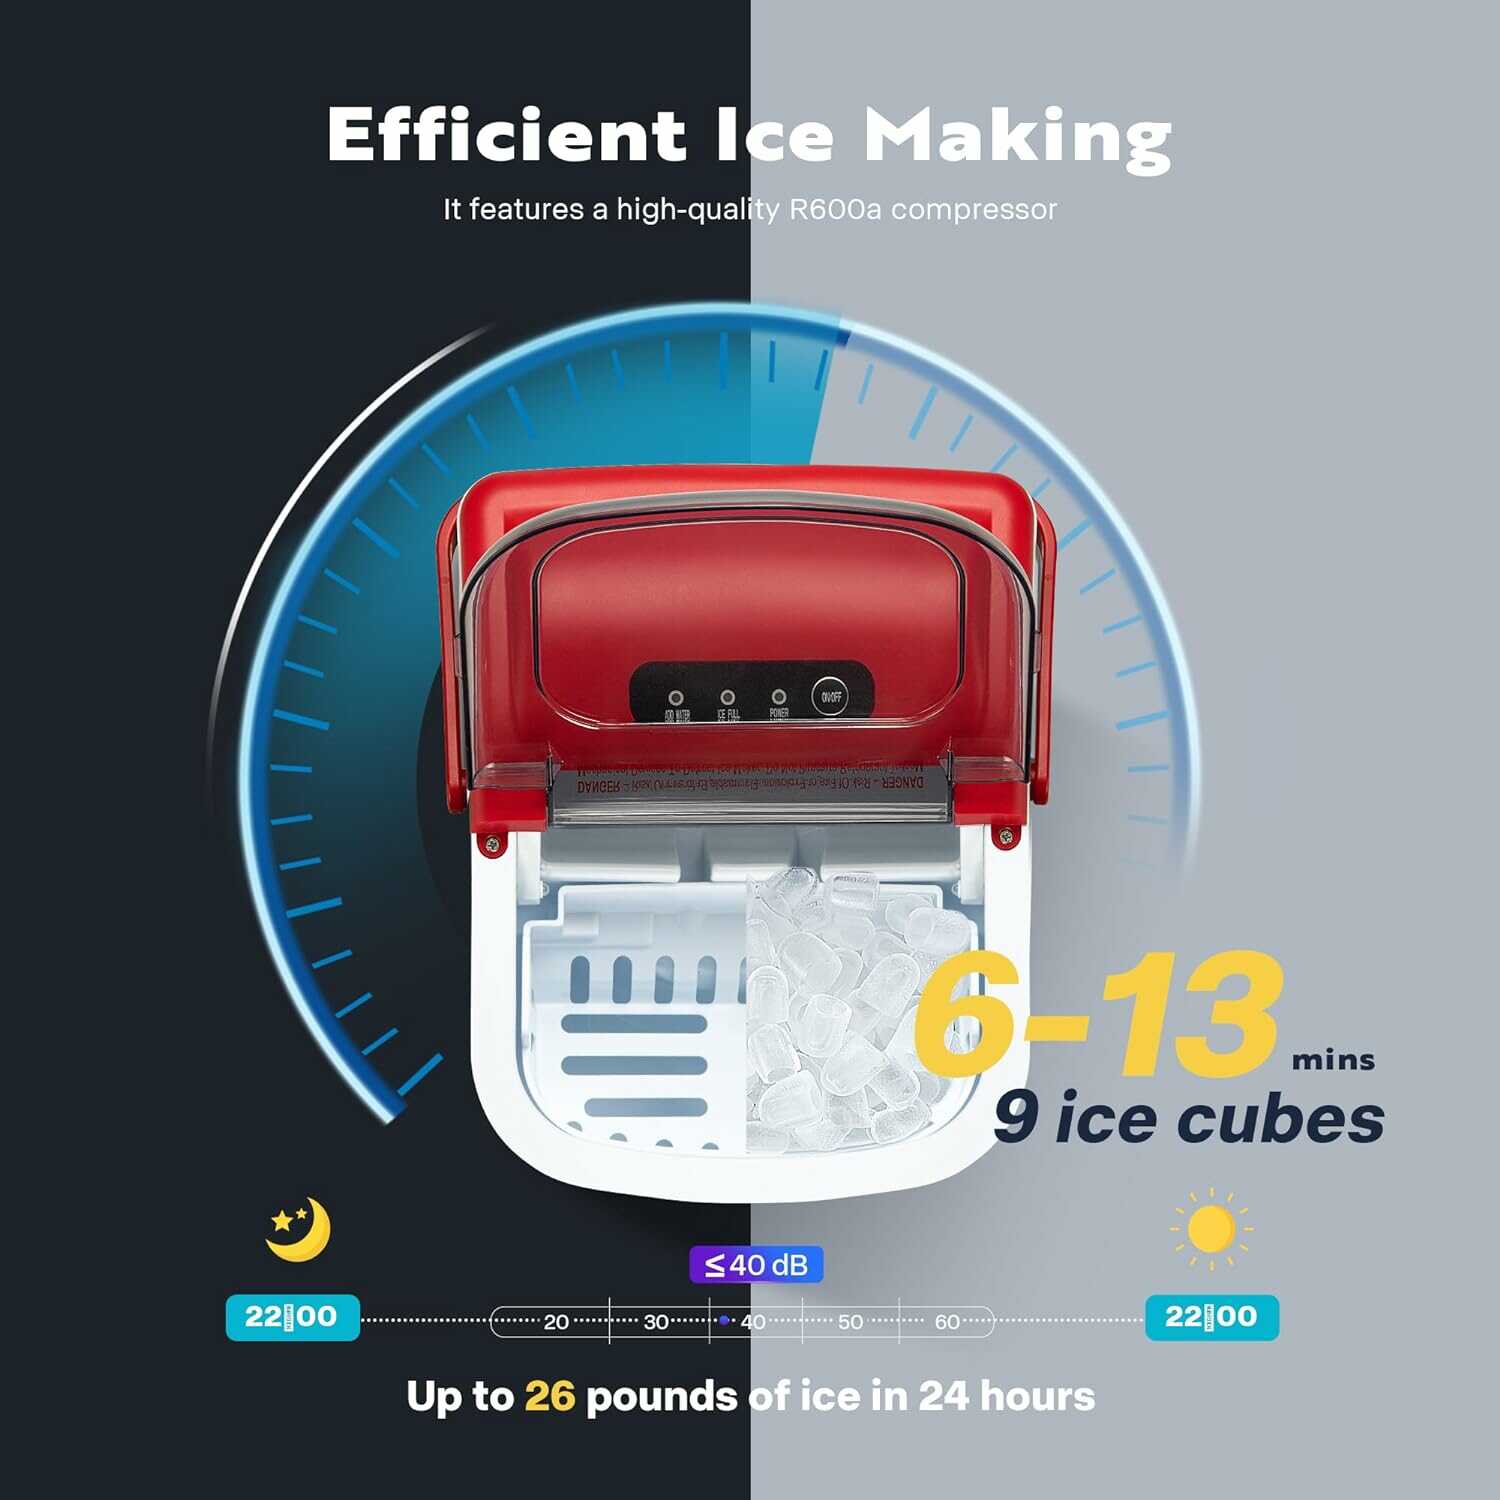 VIVOHOME Electric Portable Compact Countertop Automatic Ice Cube Maker Machine